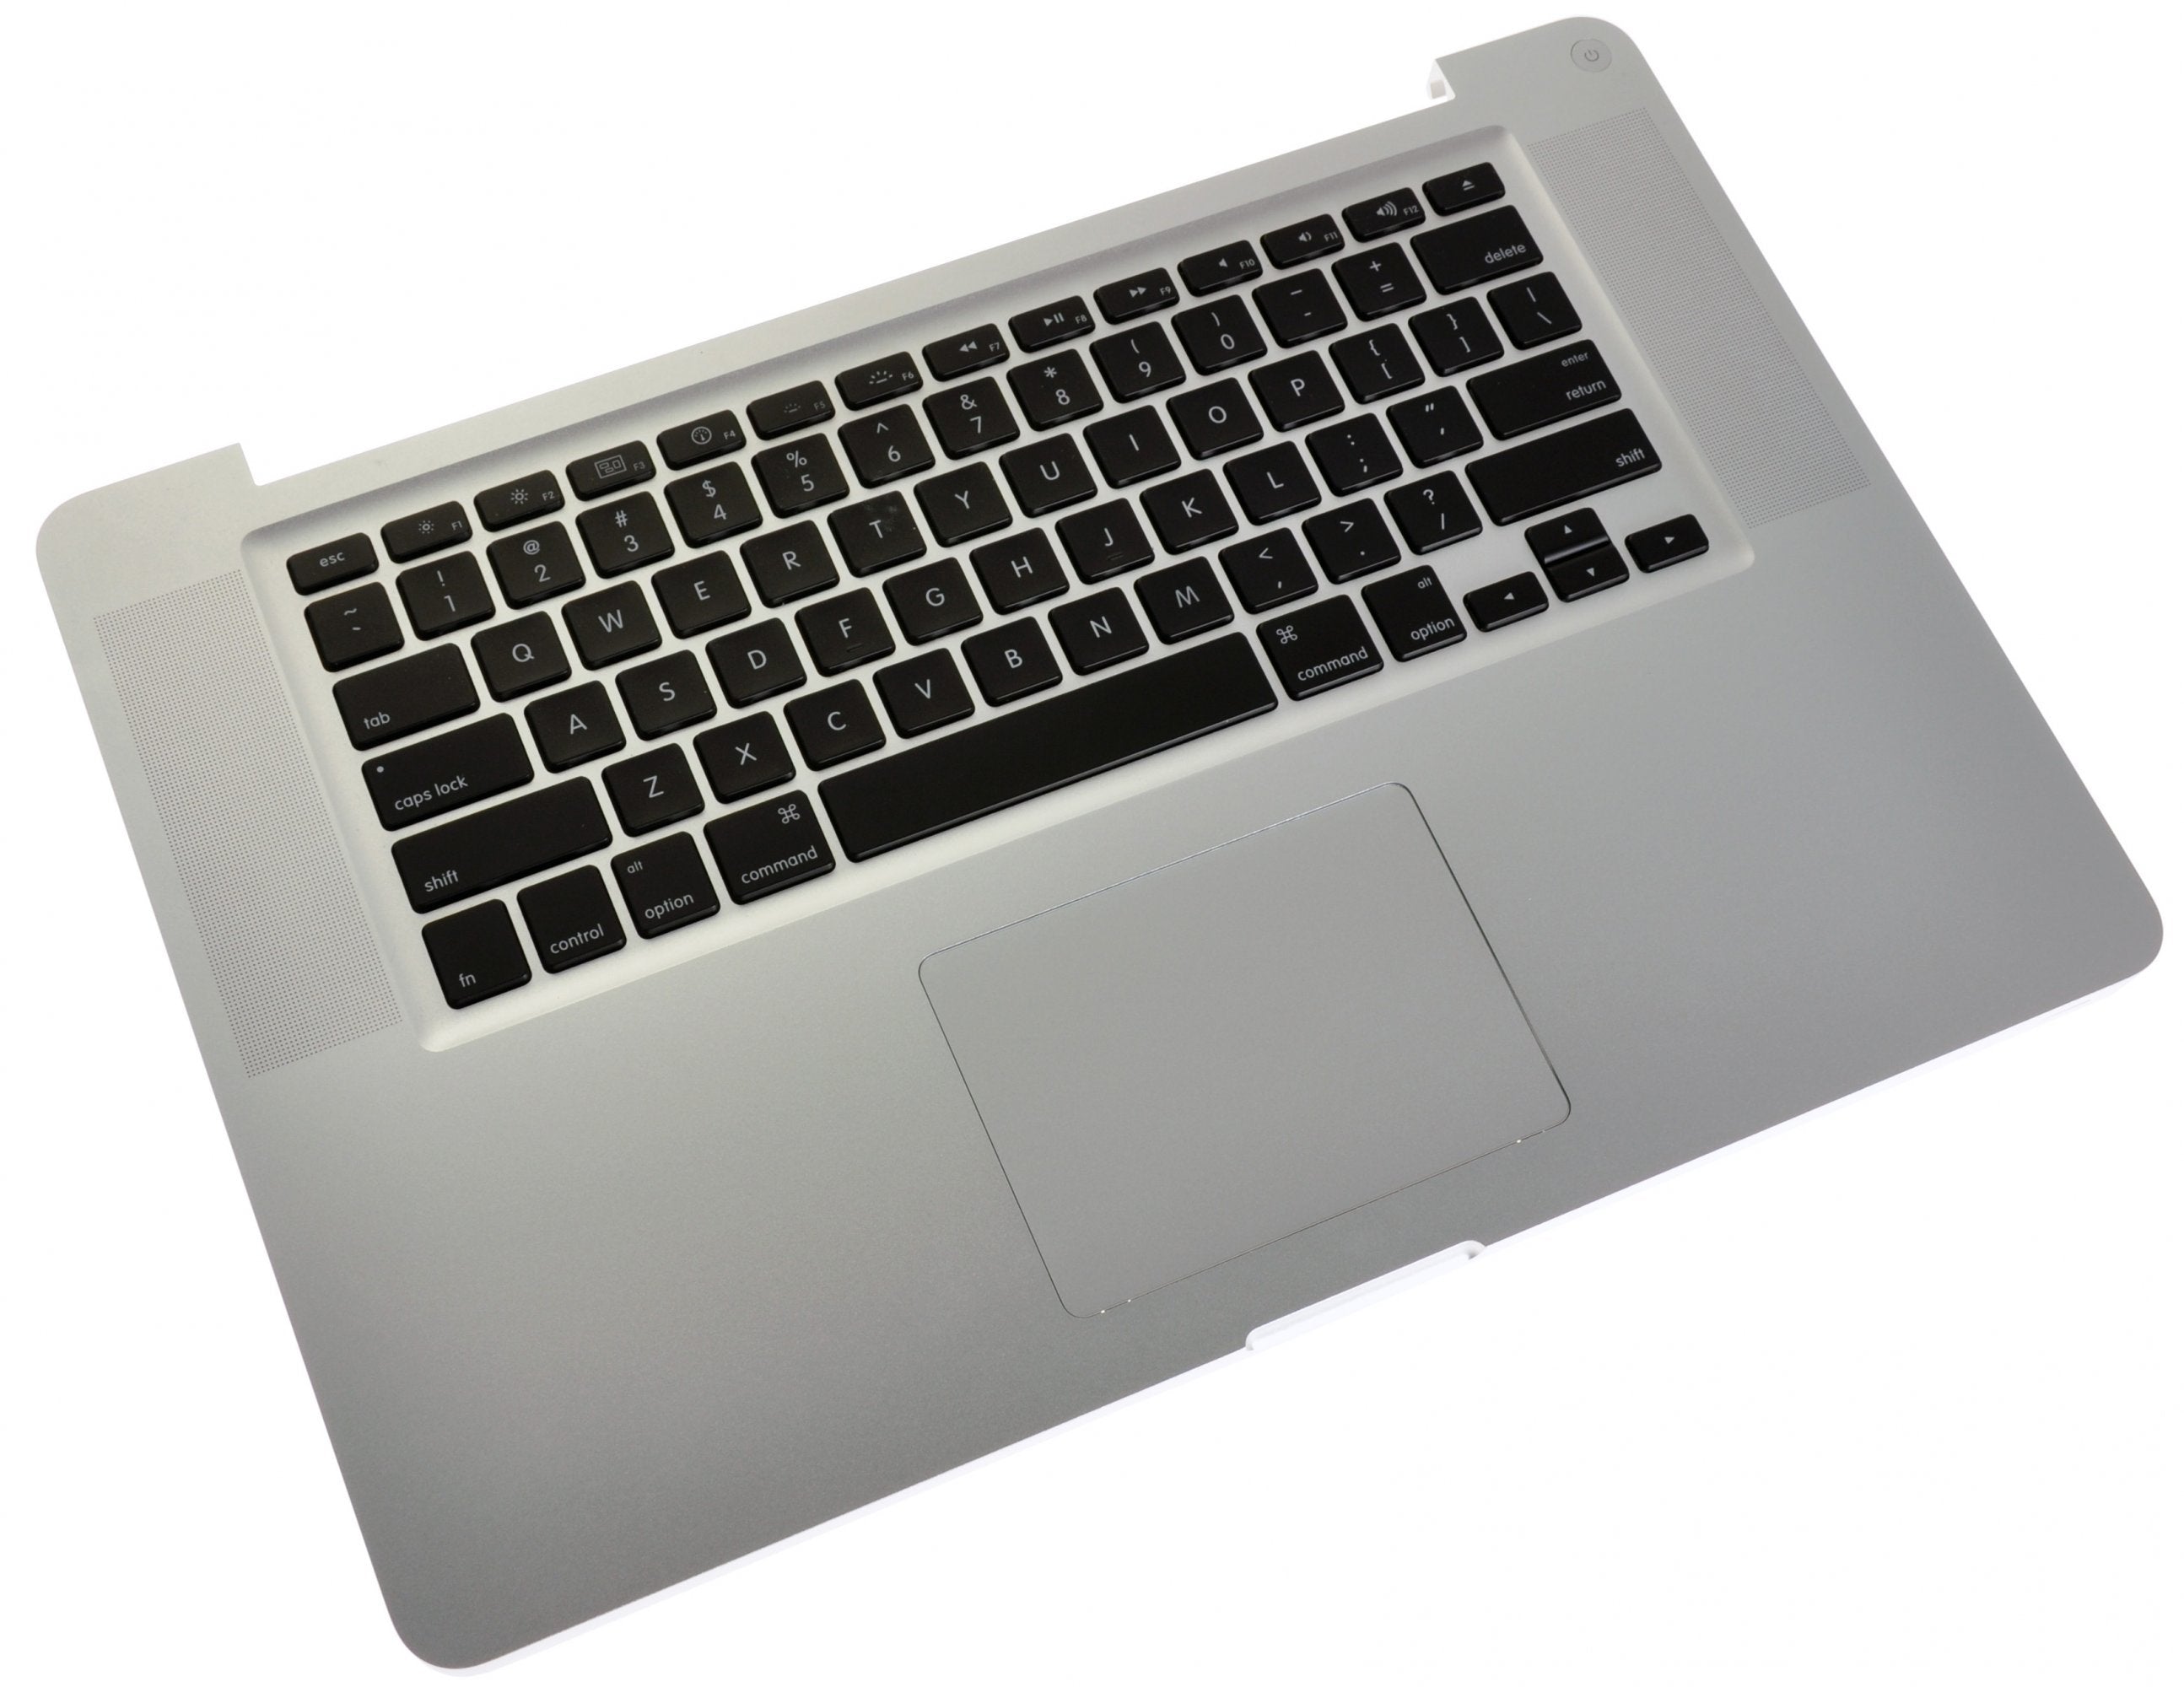 MacBook Pro 15" Unibody (Late 2008-Early 2009) Upper Case